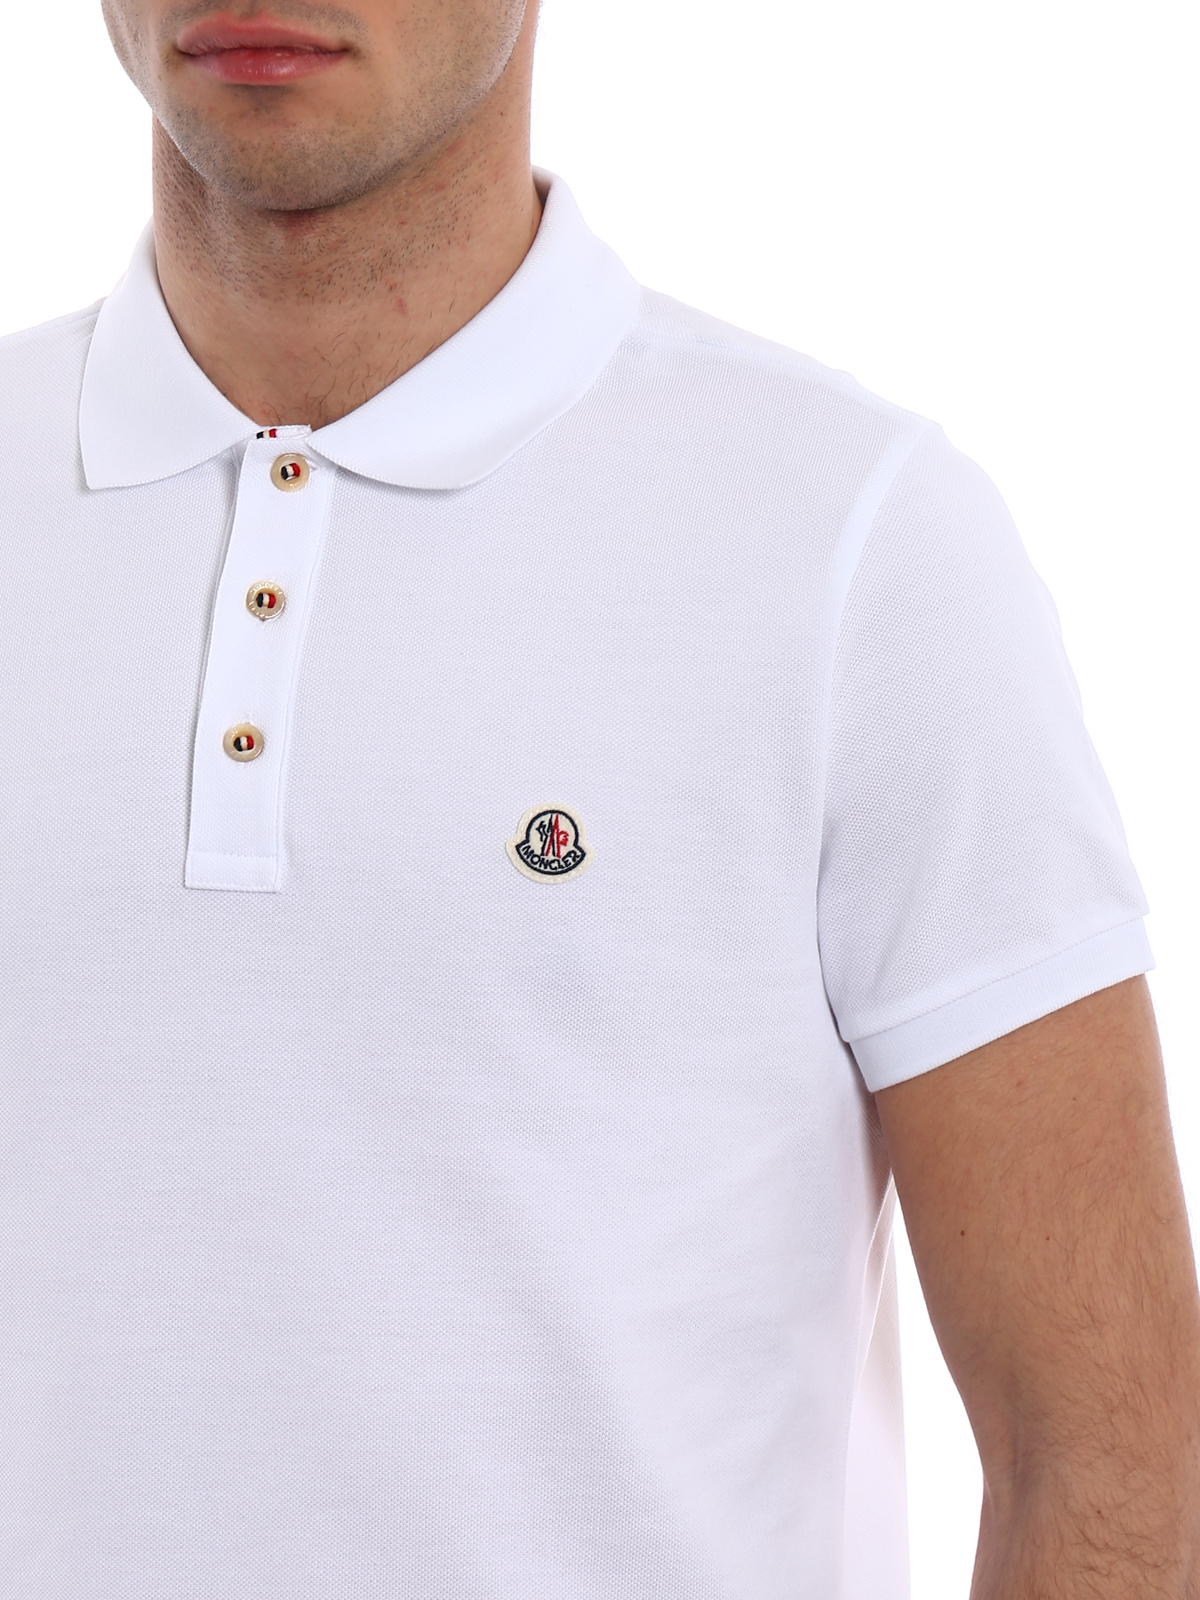 Moncler - Tricolour placket white polo shirt - polo shirts - 834080084556001